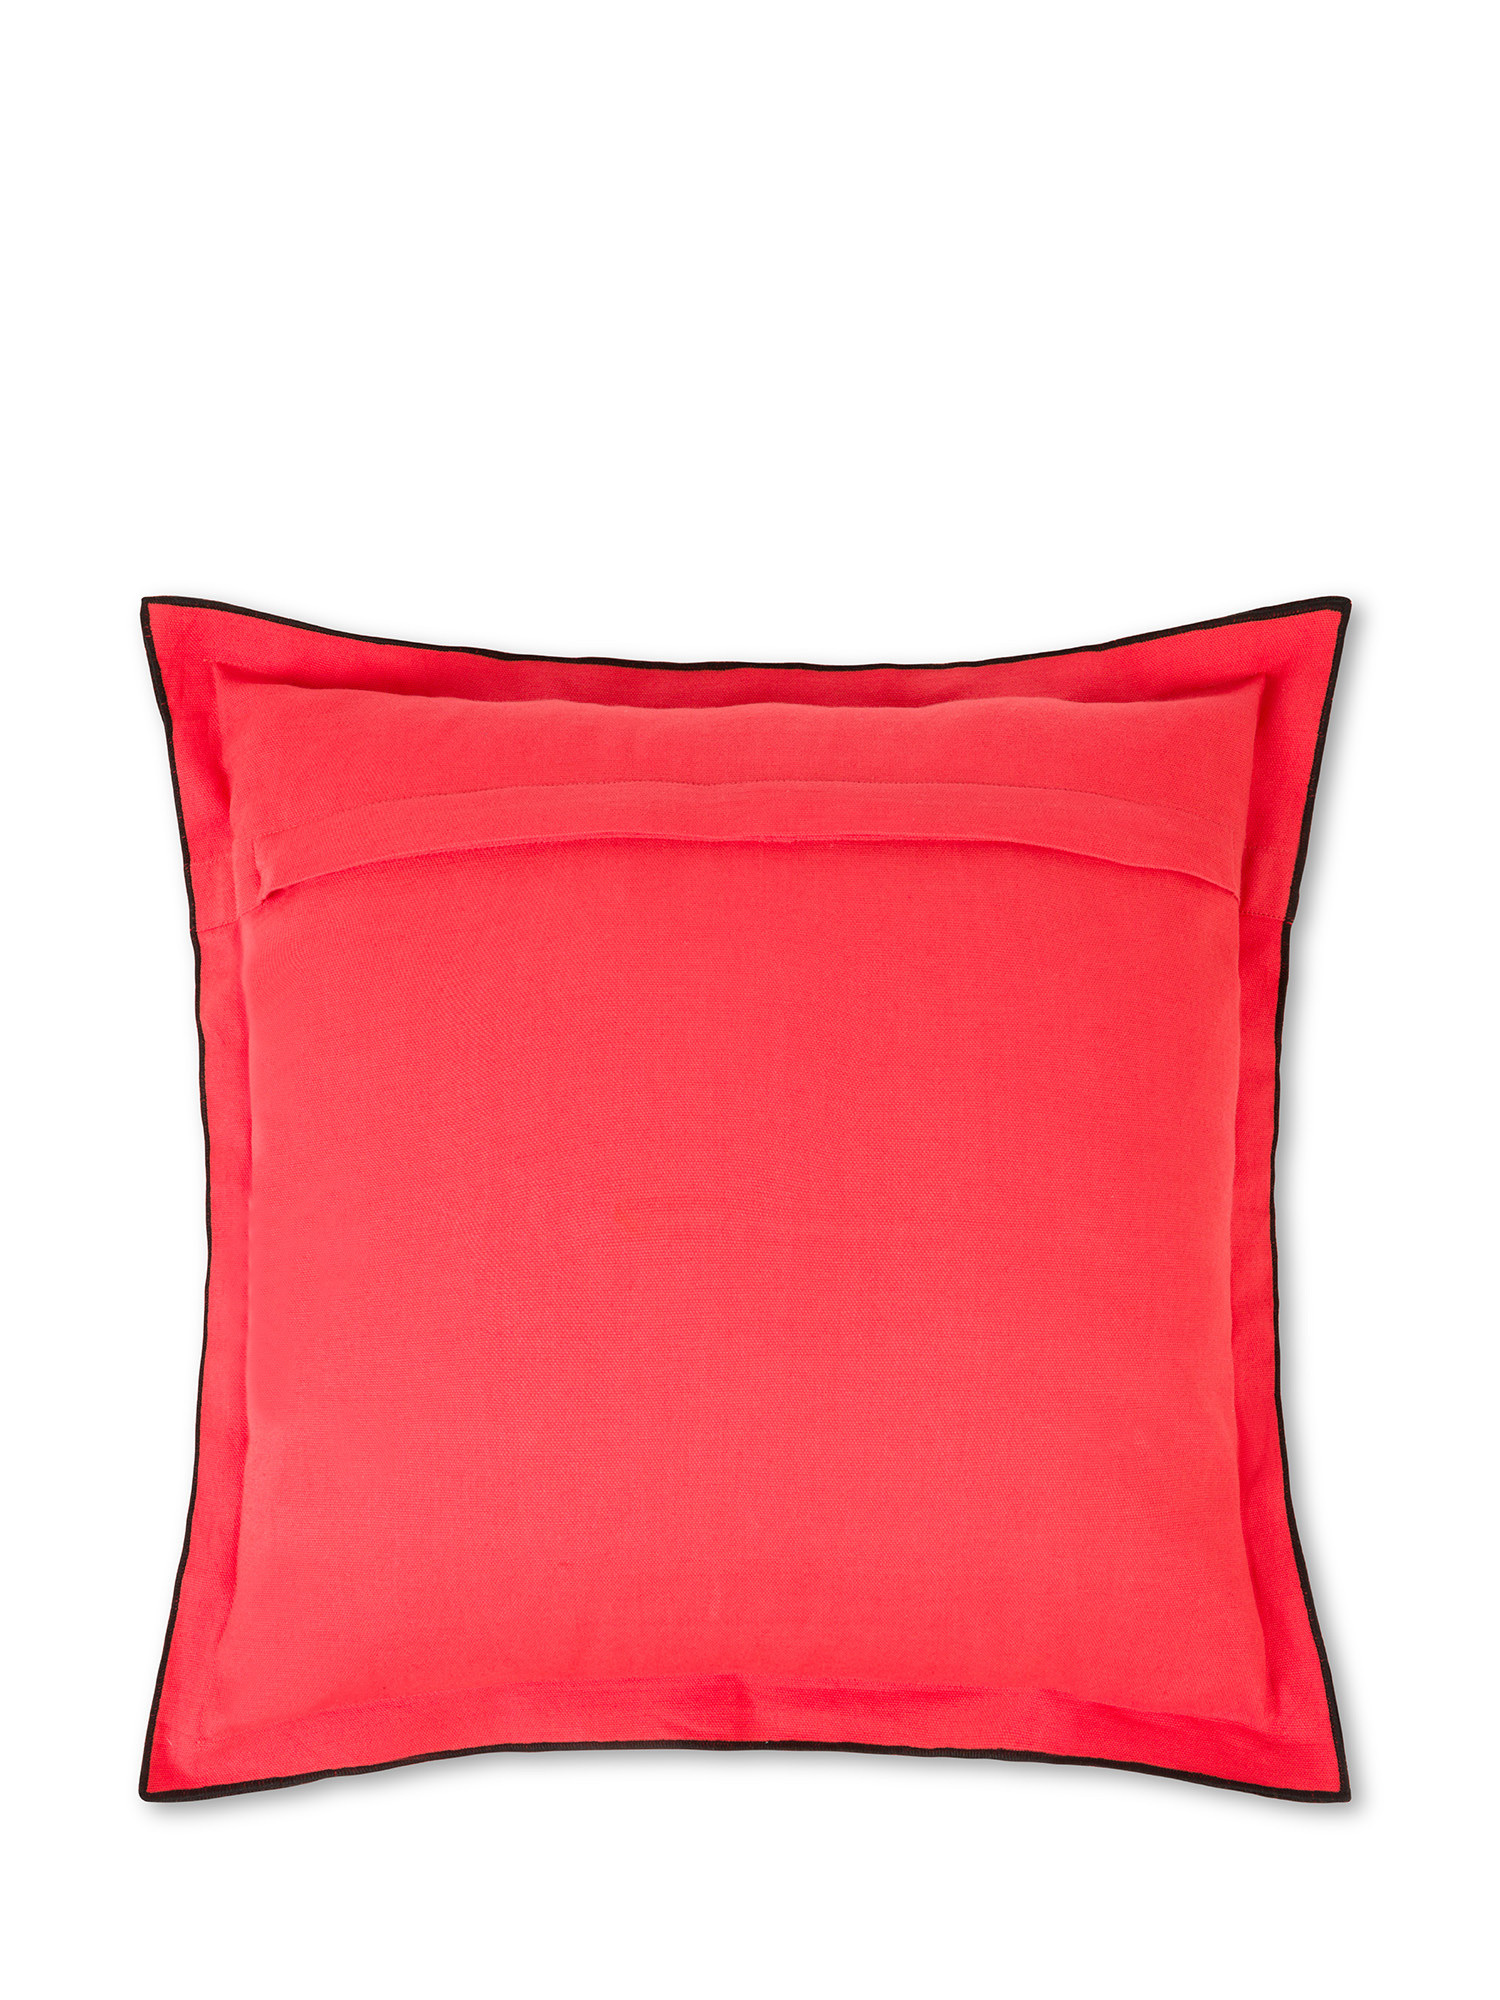 Cuscino cotone con bordo overlock 45x45cm, Rosso, large image number 1